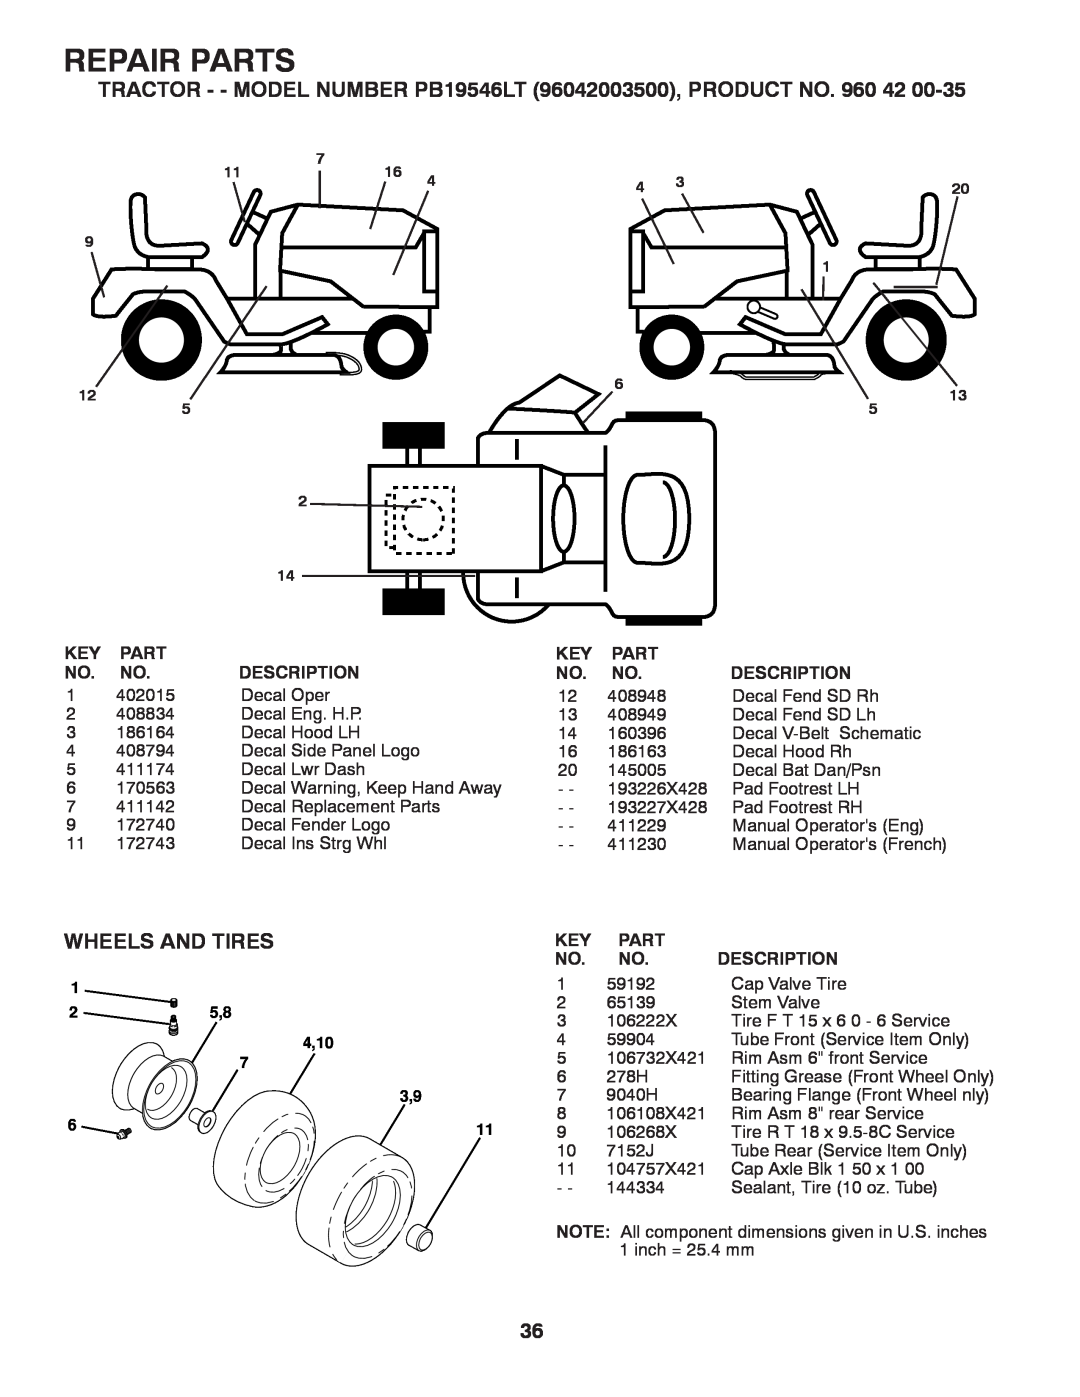 Poulan pb19546lt manual Wheels And Tires, Repair Parts, TRACTOR - - MODEL NUMBER PB19546LT 96042003500, PRODUCT NO. 960 